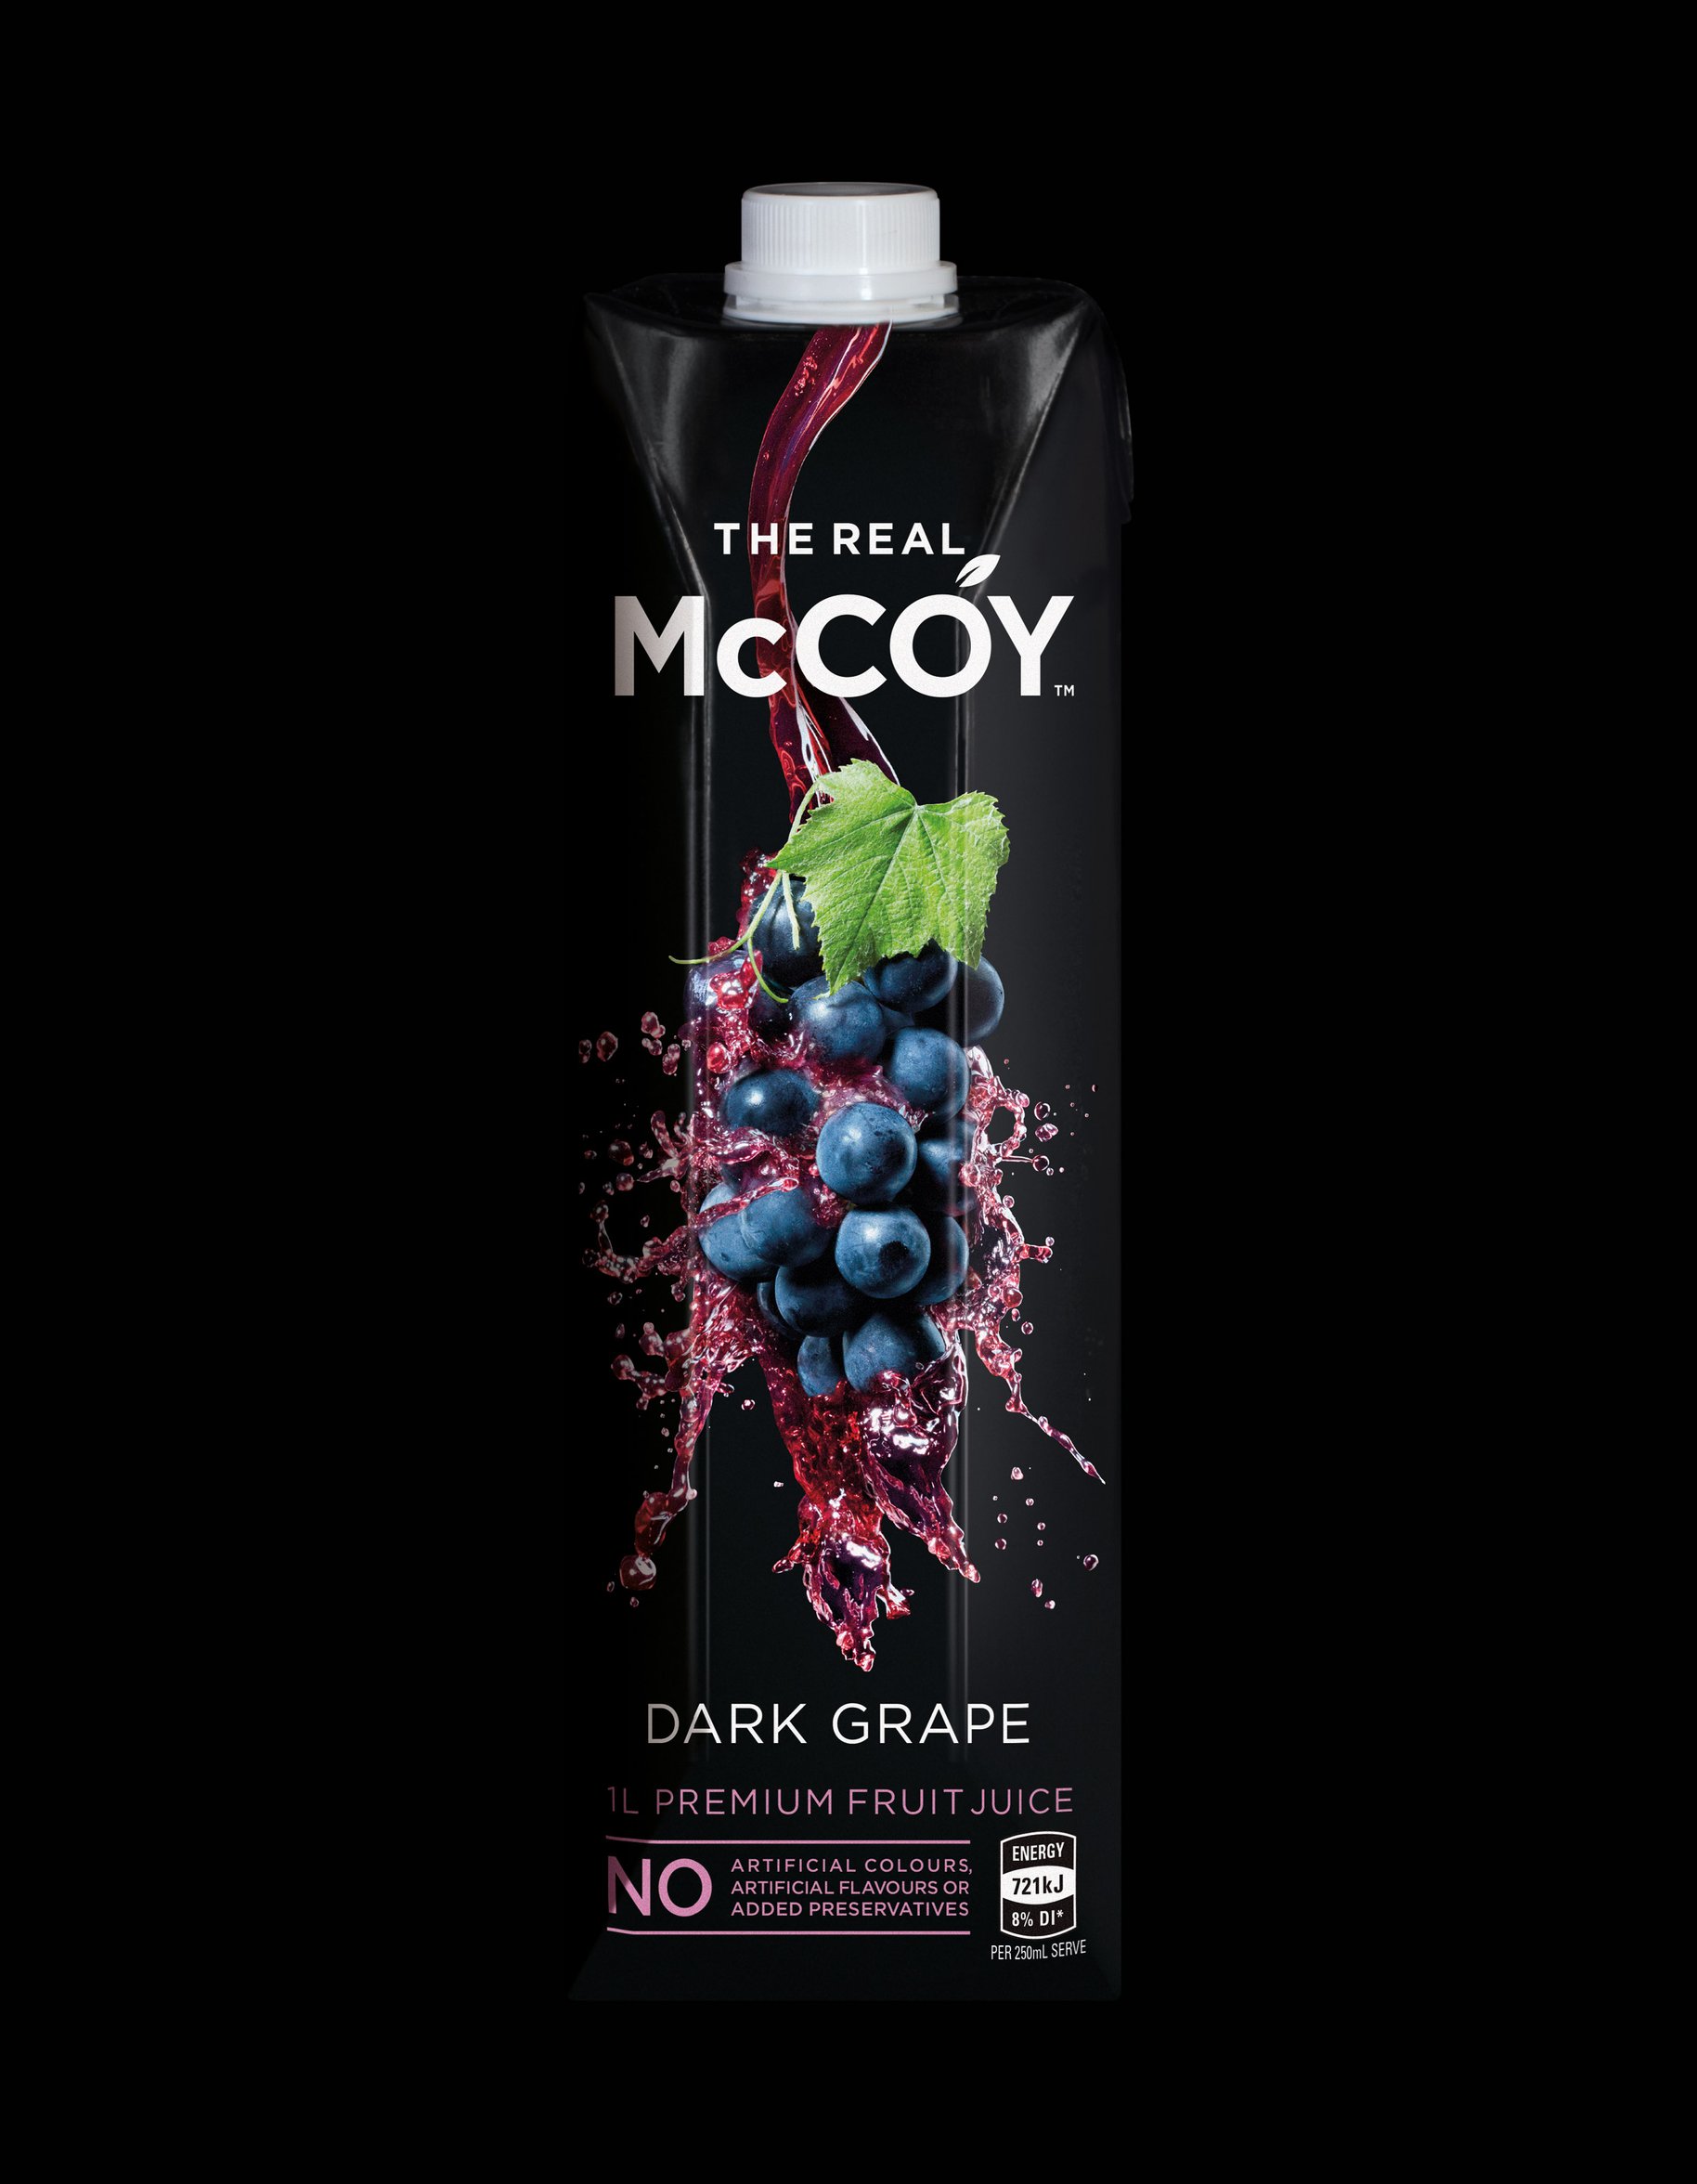 McCoy 1L tetra dark grape juice packaging